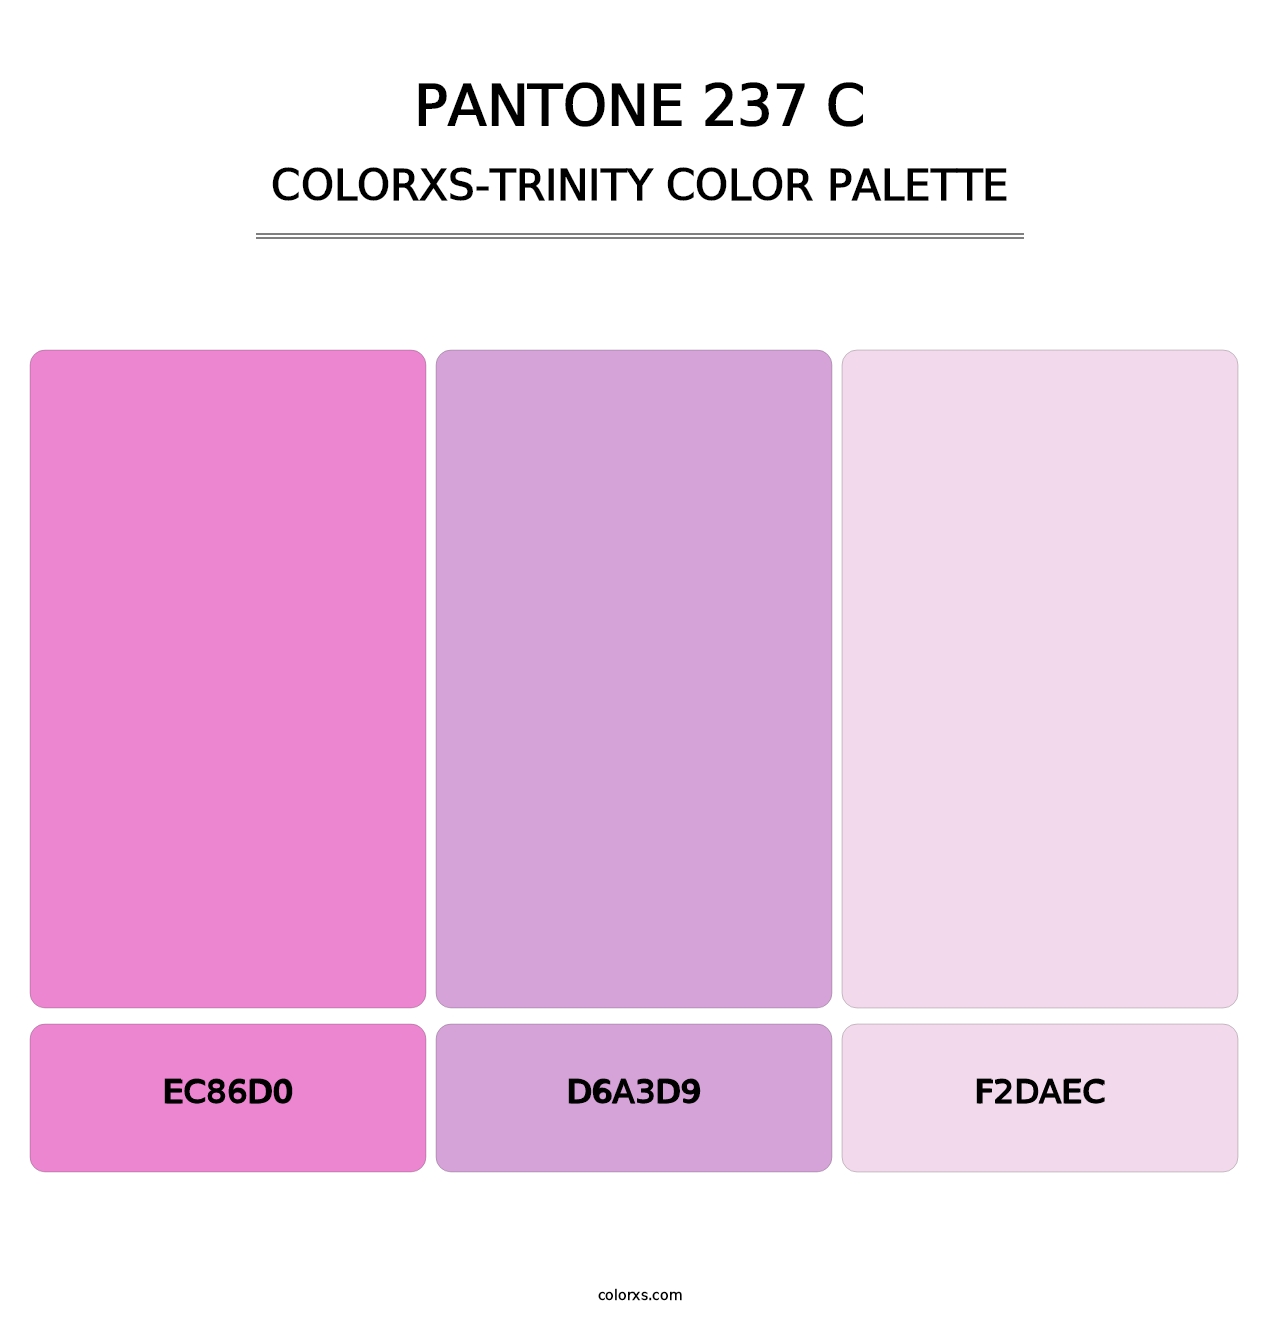 PANTONE 237 C - Colorxs Trinity Palette